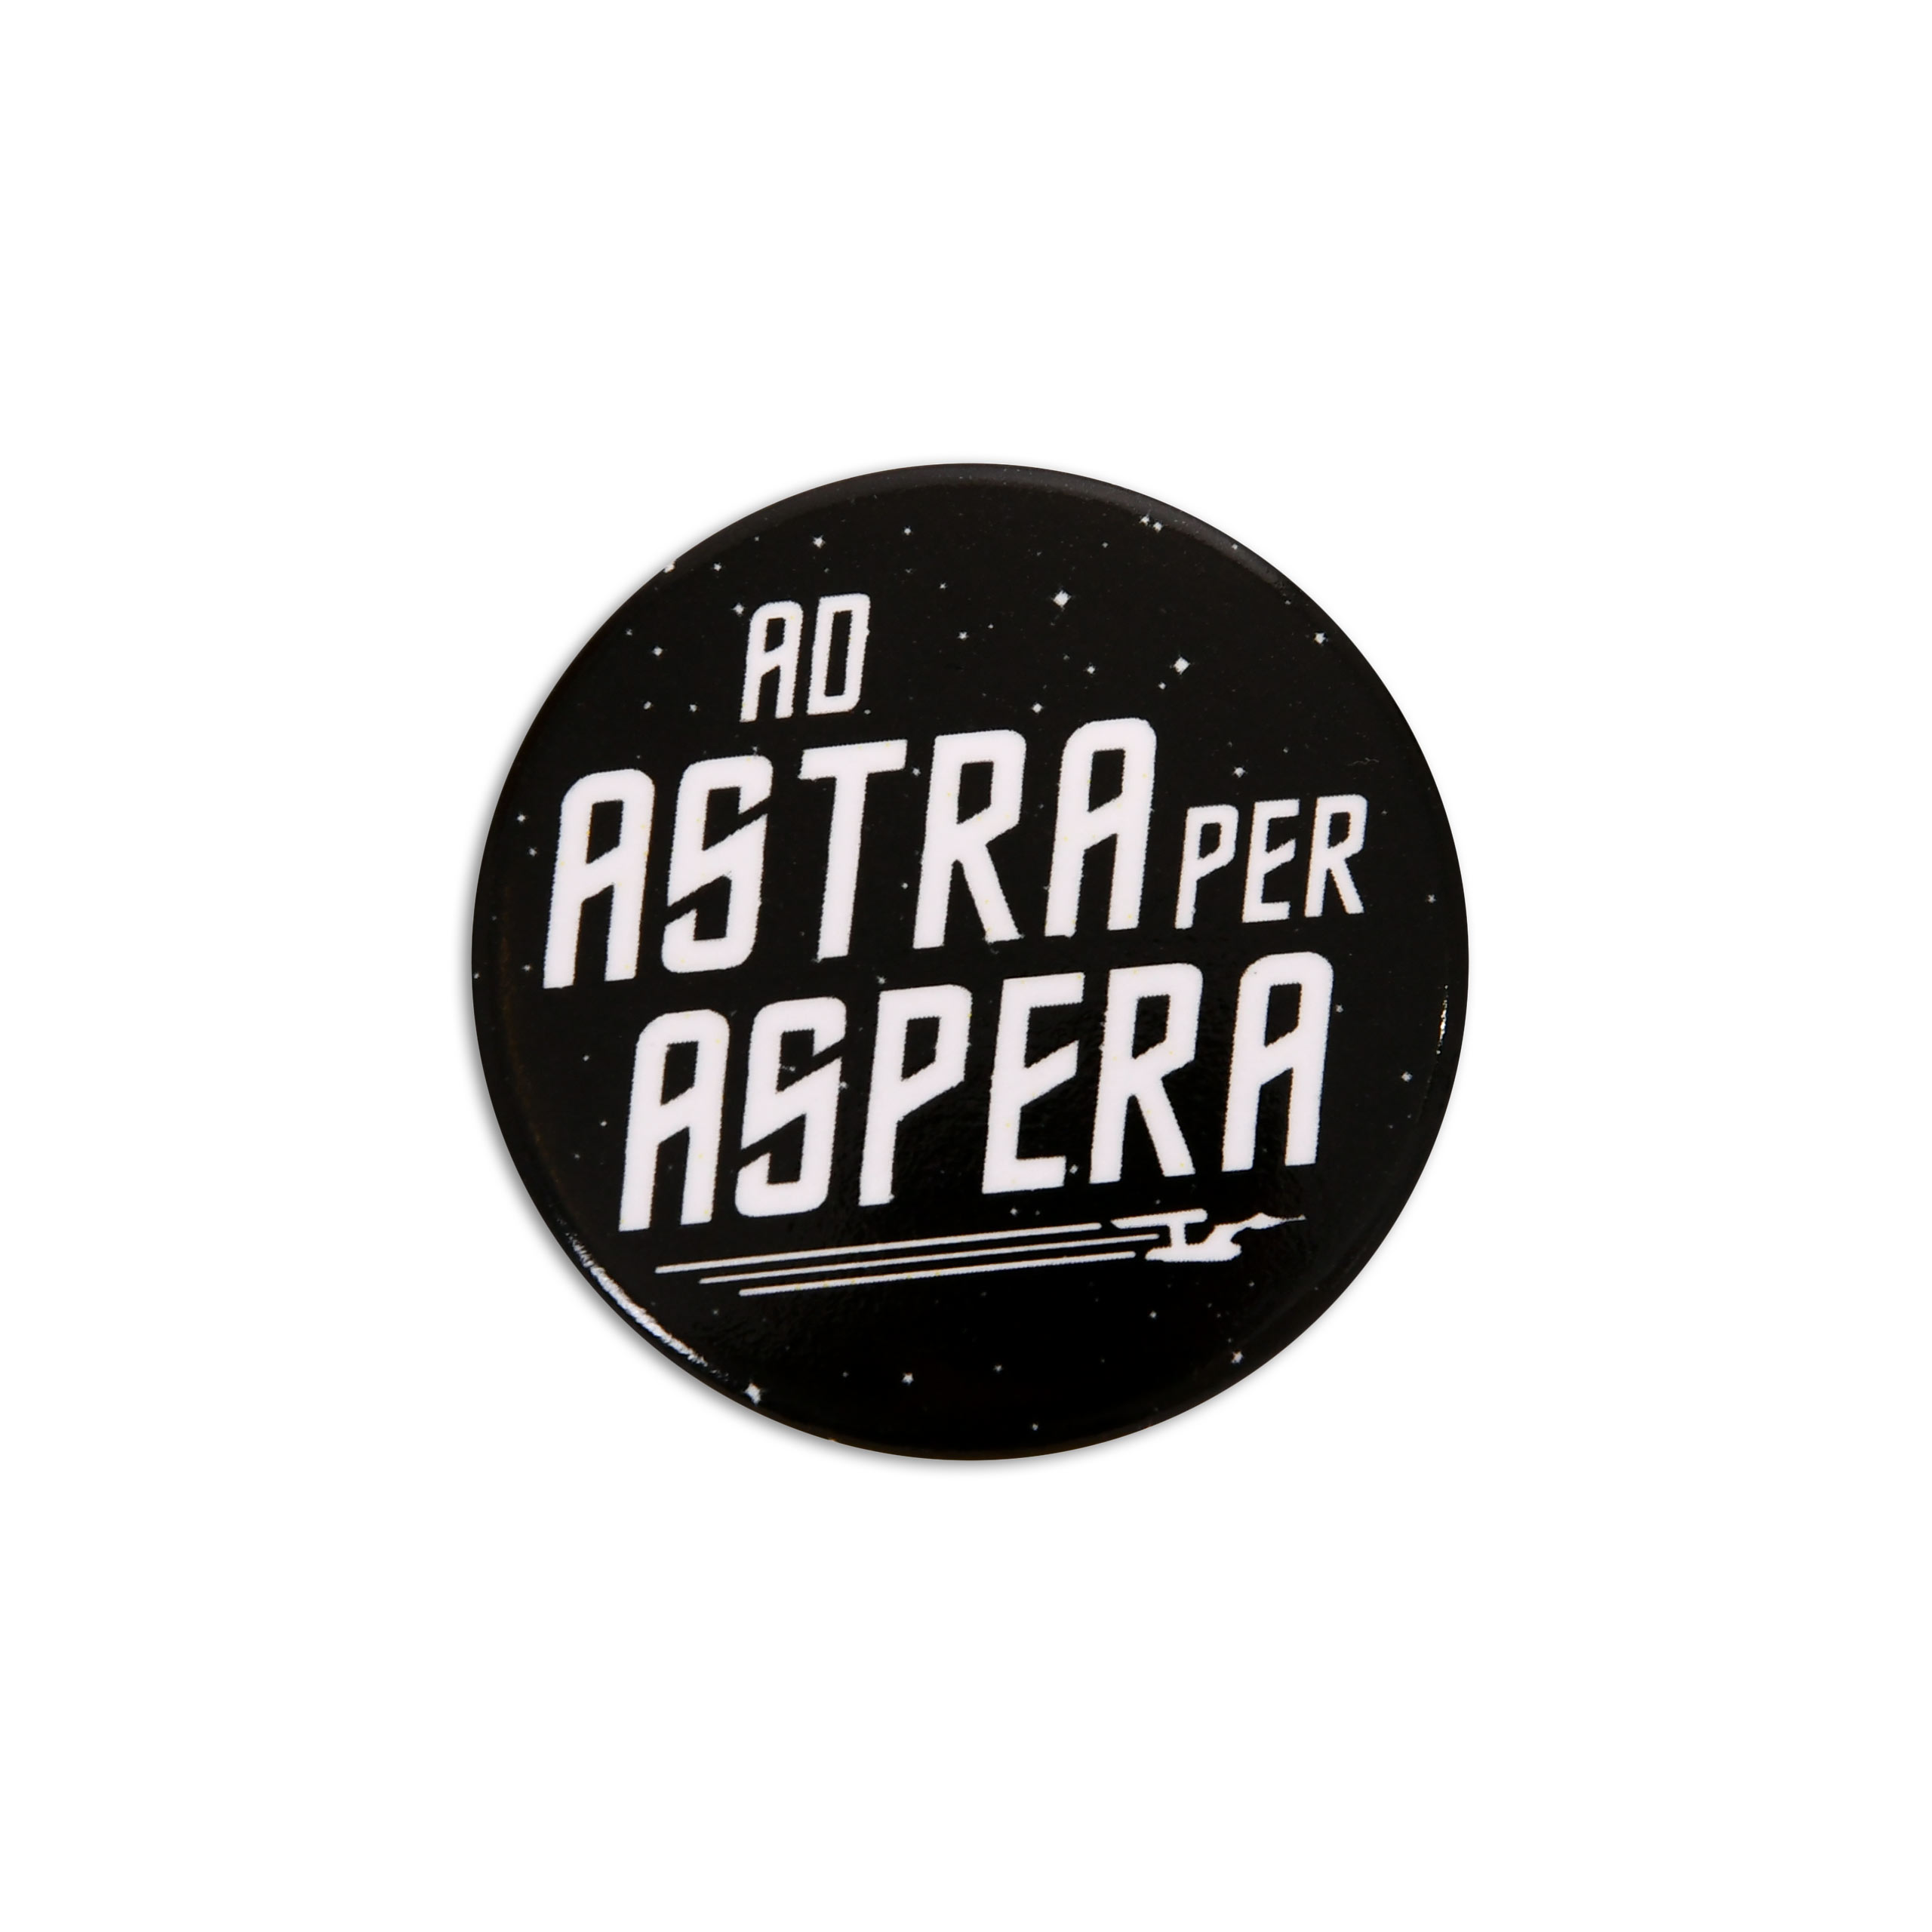 Bouton Ad Astra Per Aspera pour les fans de Star Trek